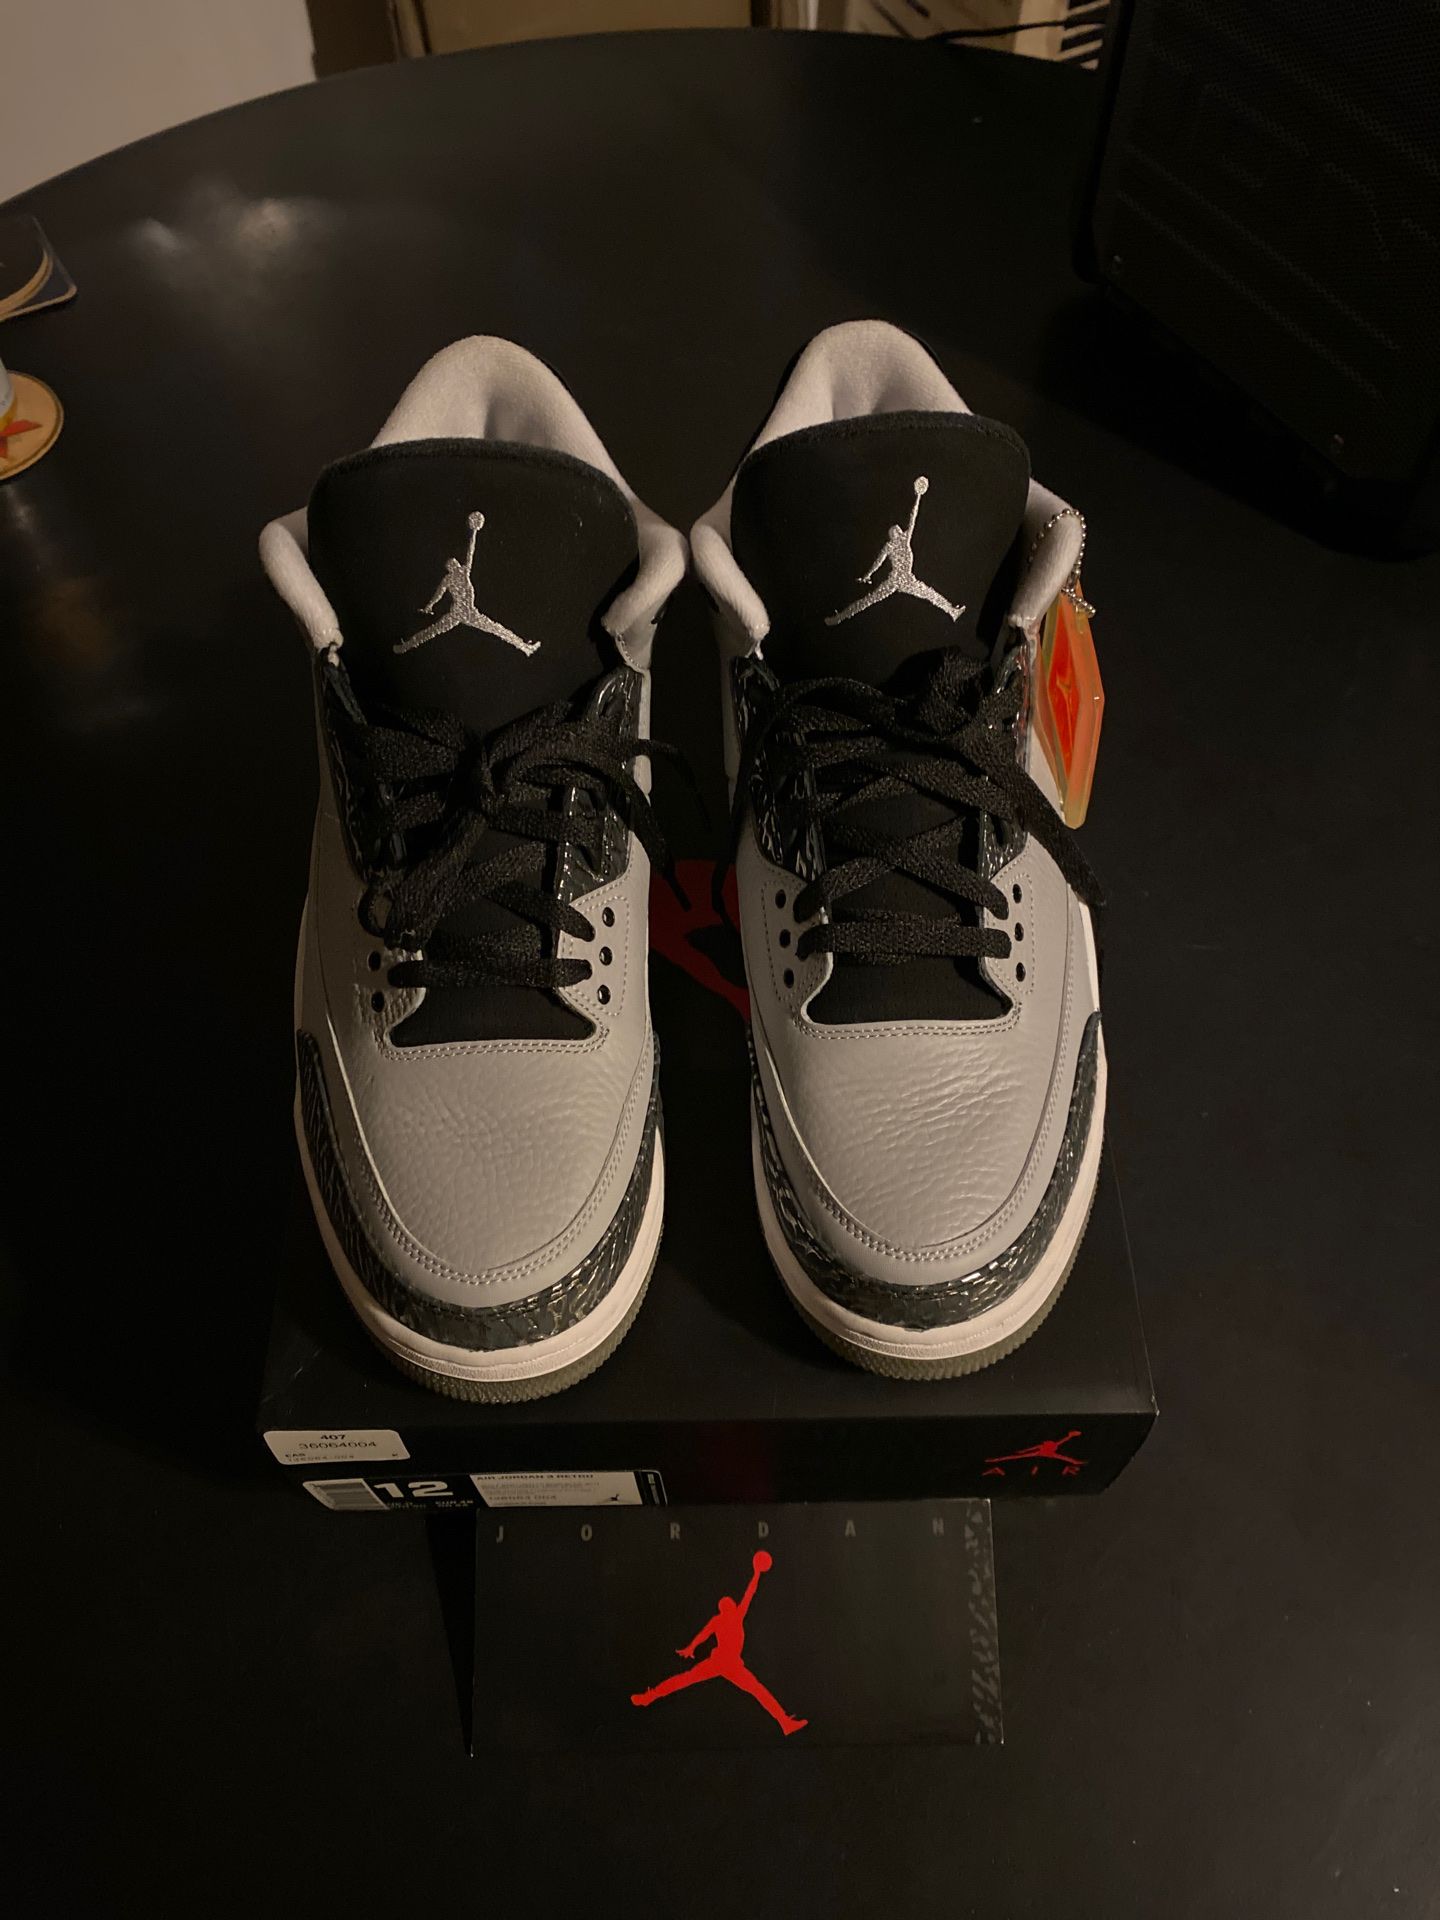 Jordan 3 Retro Wolf Grey, size 12